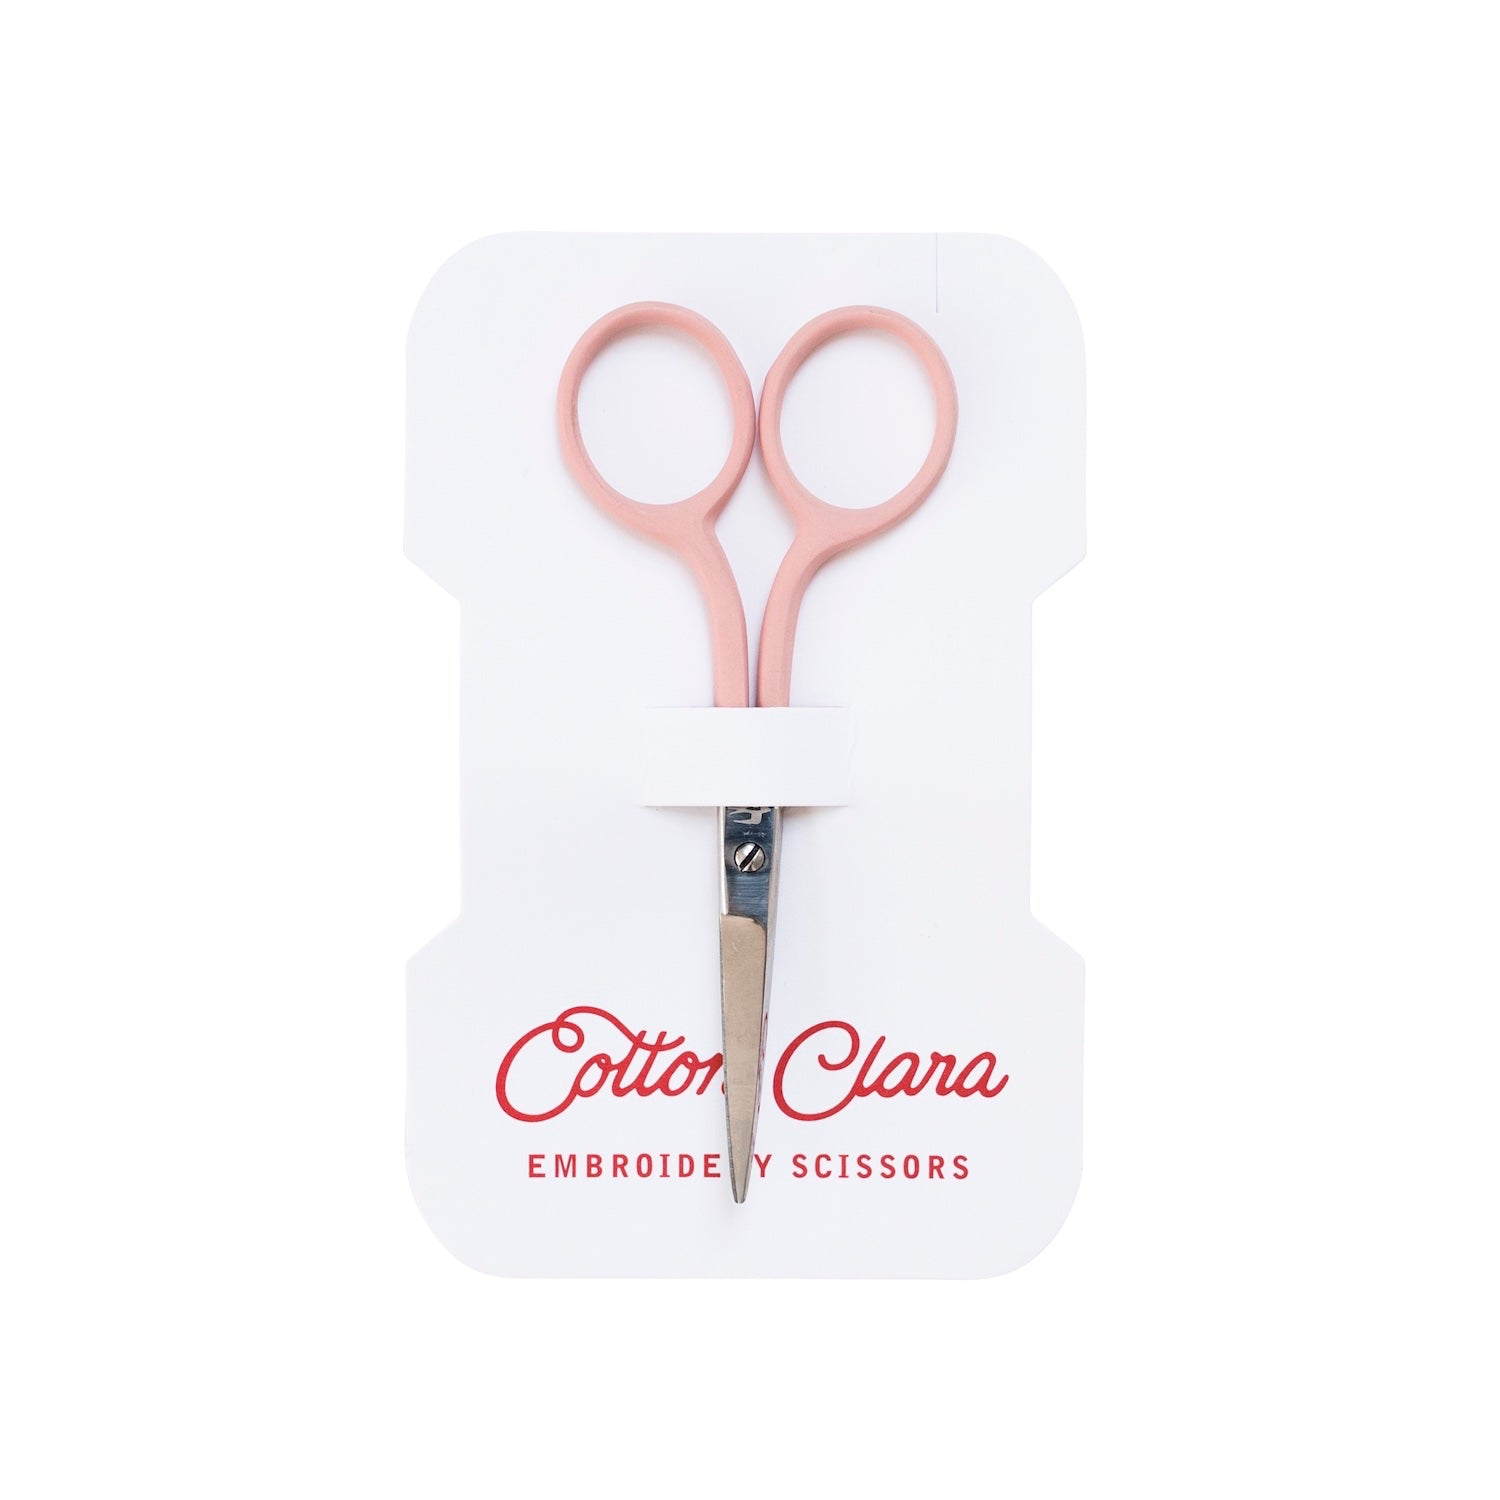 Cotton Clara - COCL Cotton Clara - Embroidery Scissors, Blush Pink